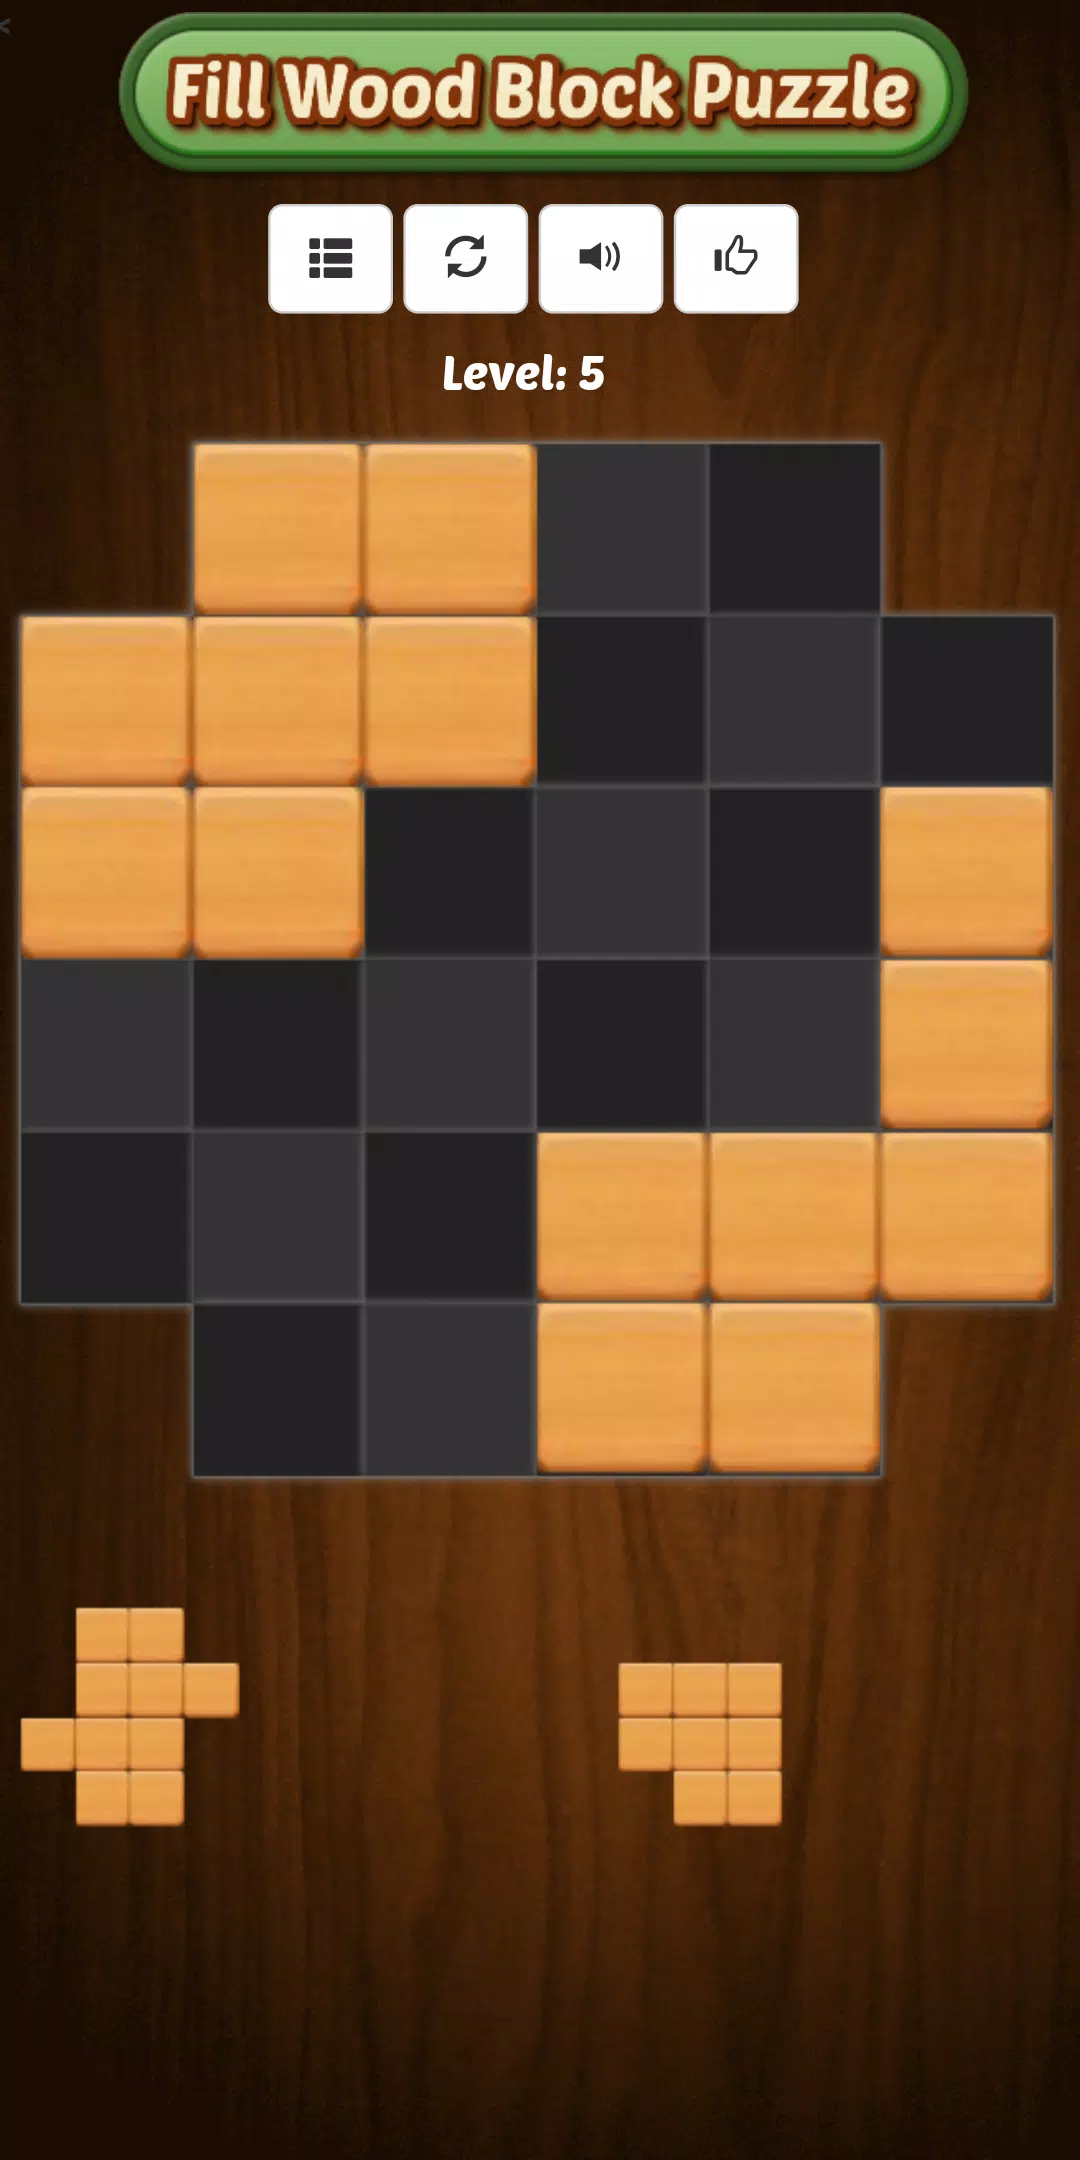 Juegos de rompecabezas de bloques de madera 2021 for Android - APK Download